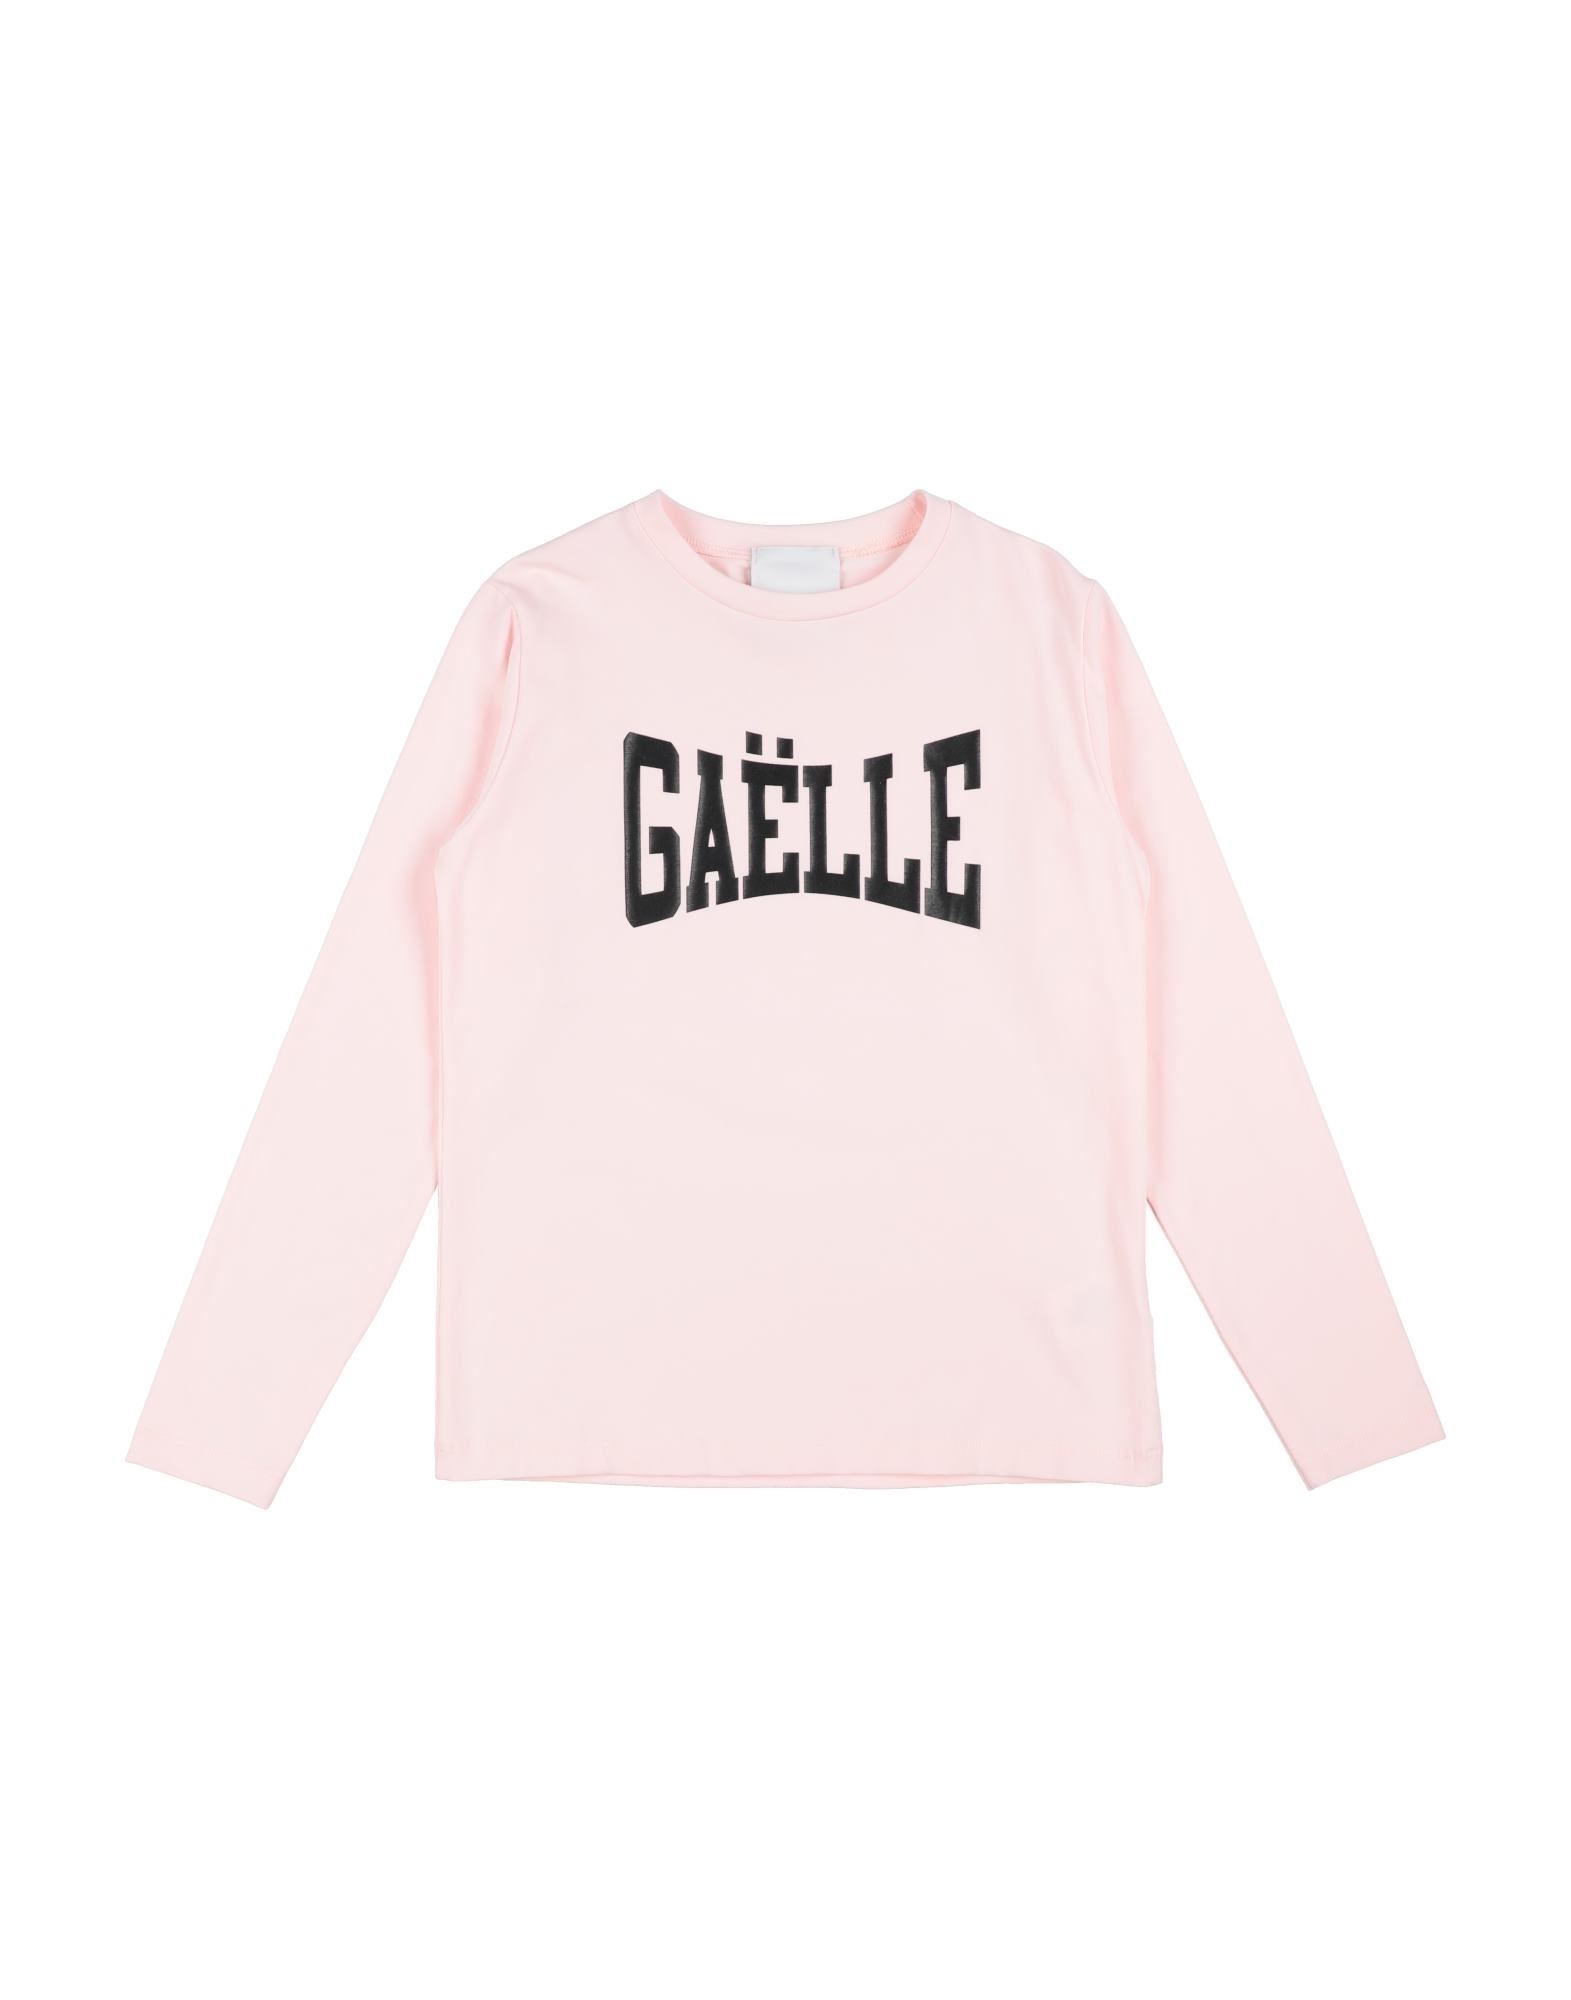 Gaelle Paris Kids' T-shirts In Light Pink